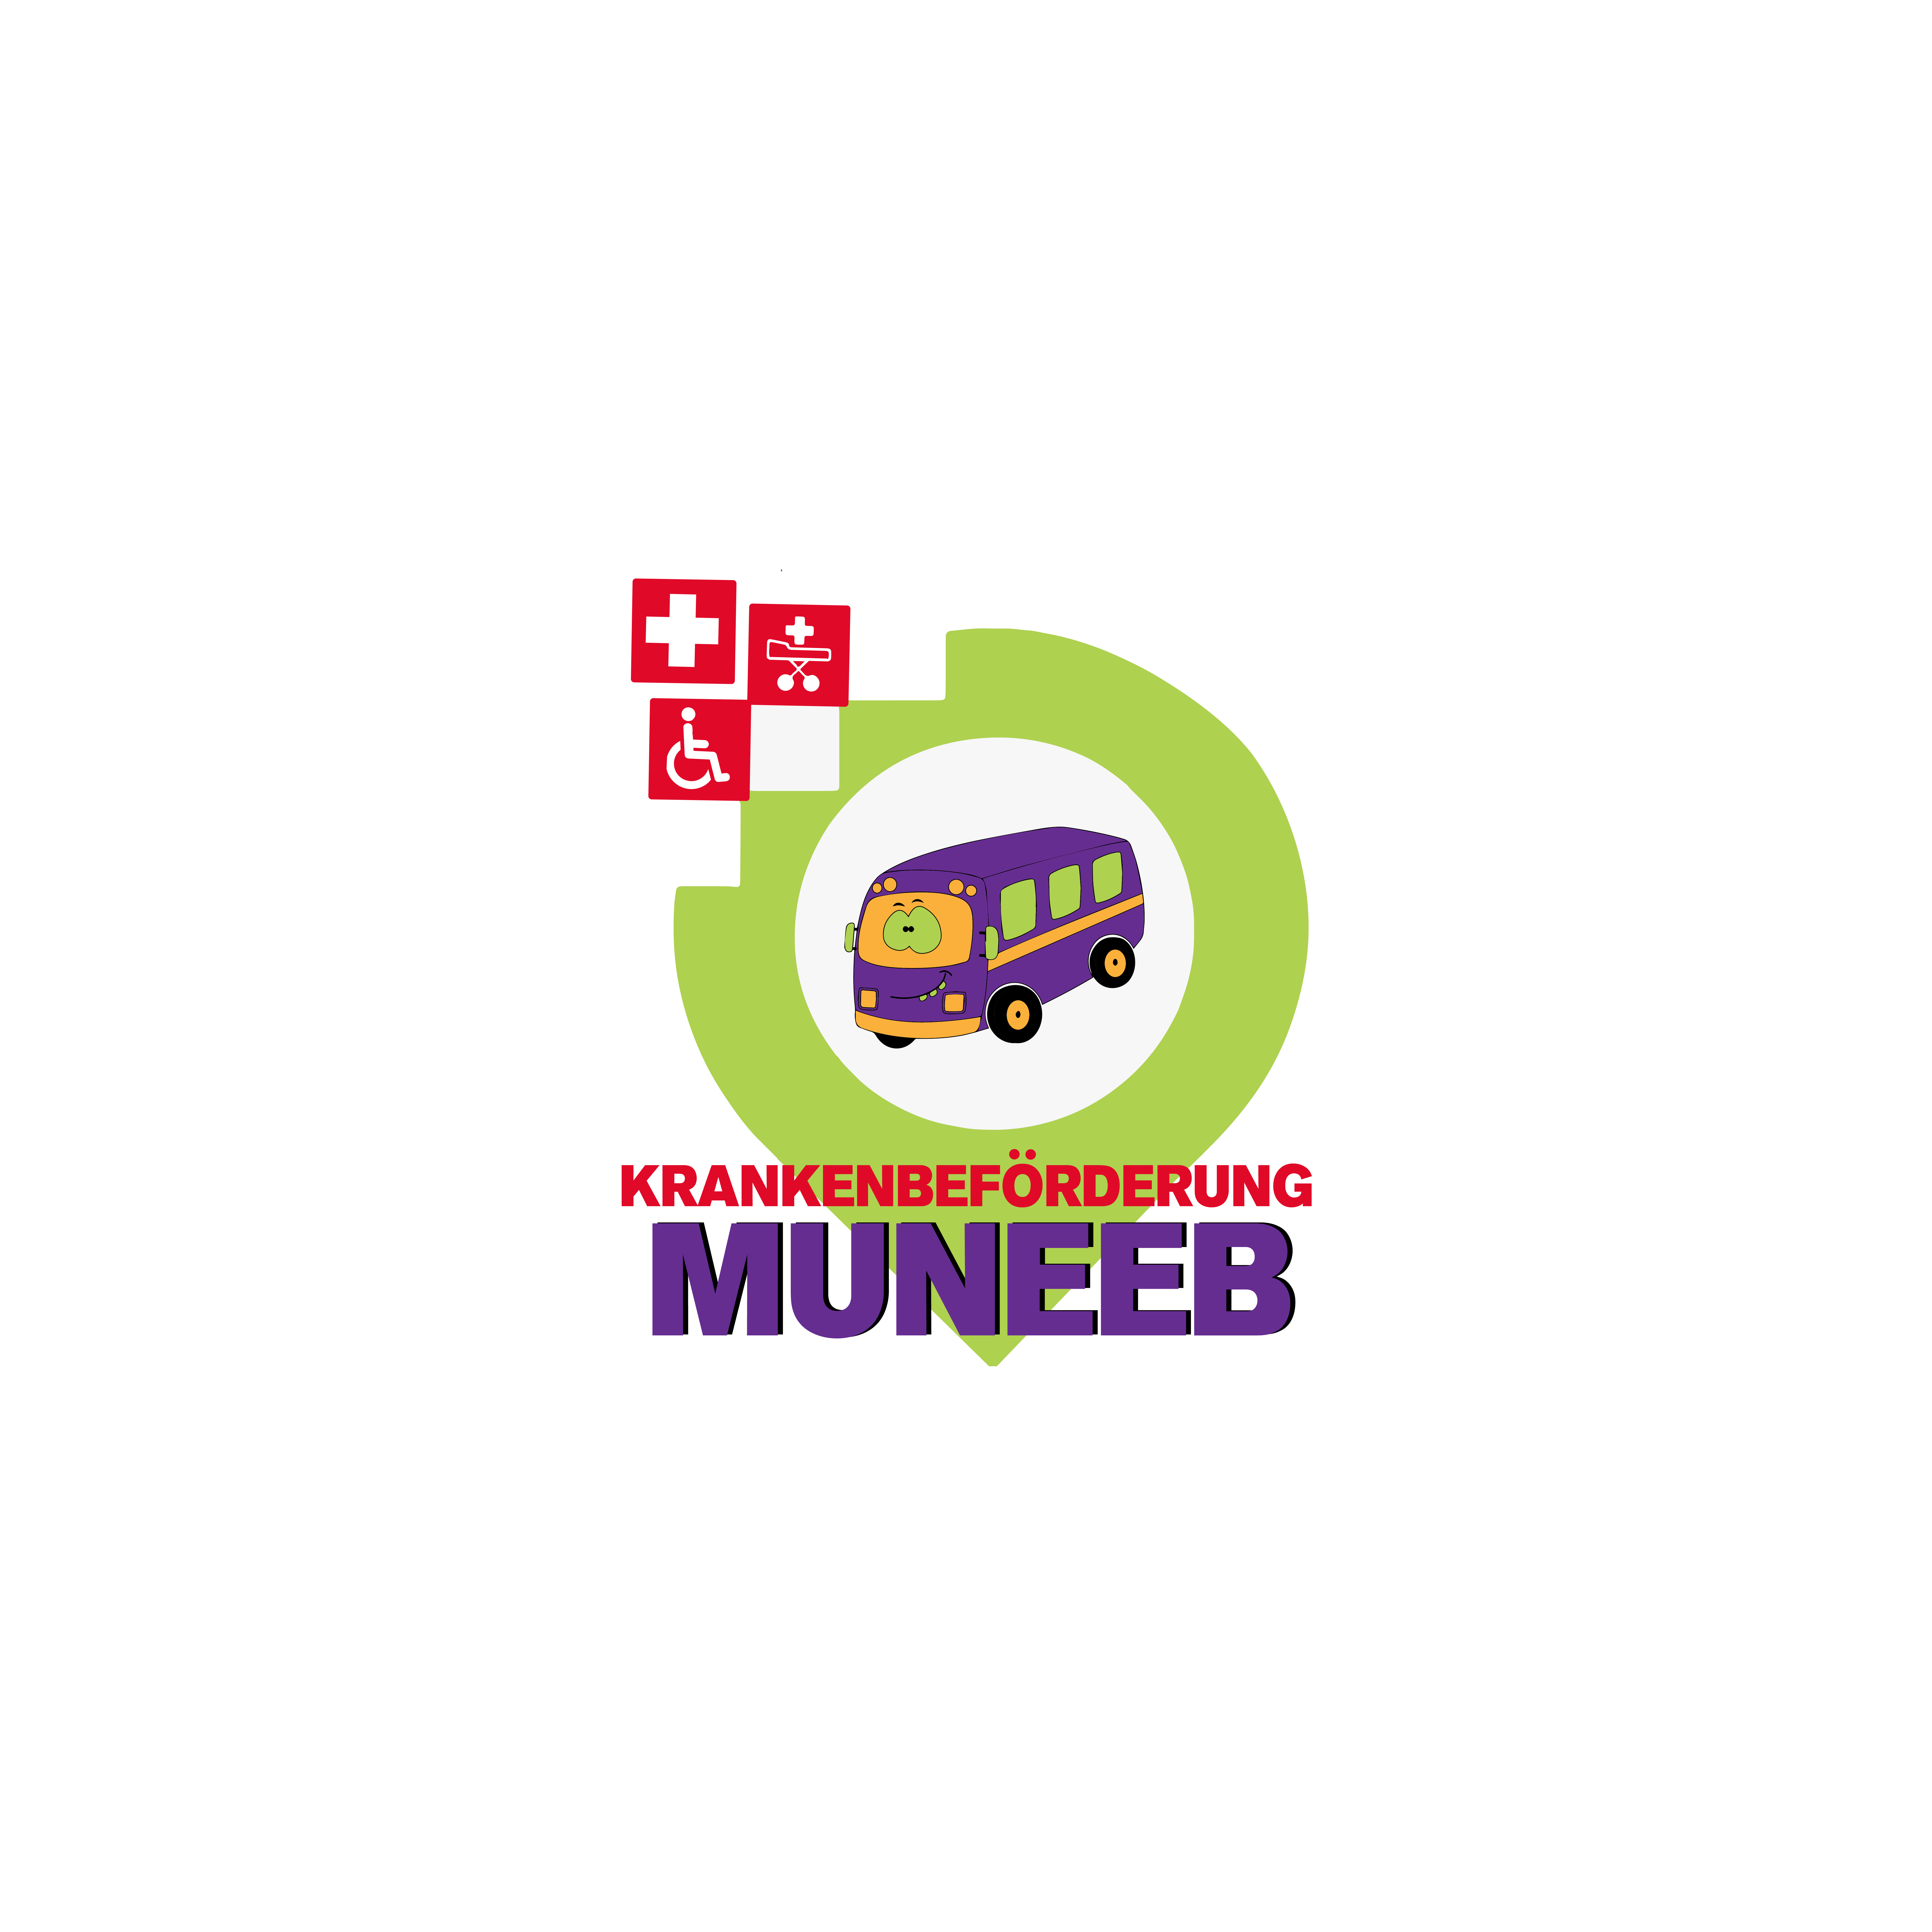 Der Krankentransport Bei Muneeb Logo